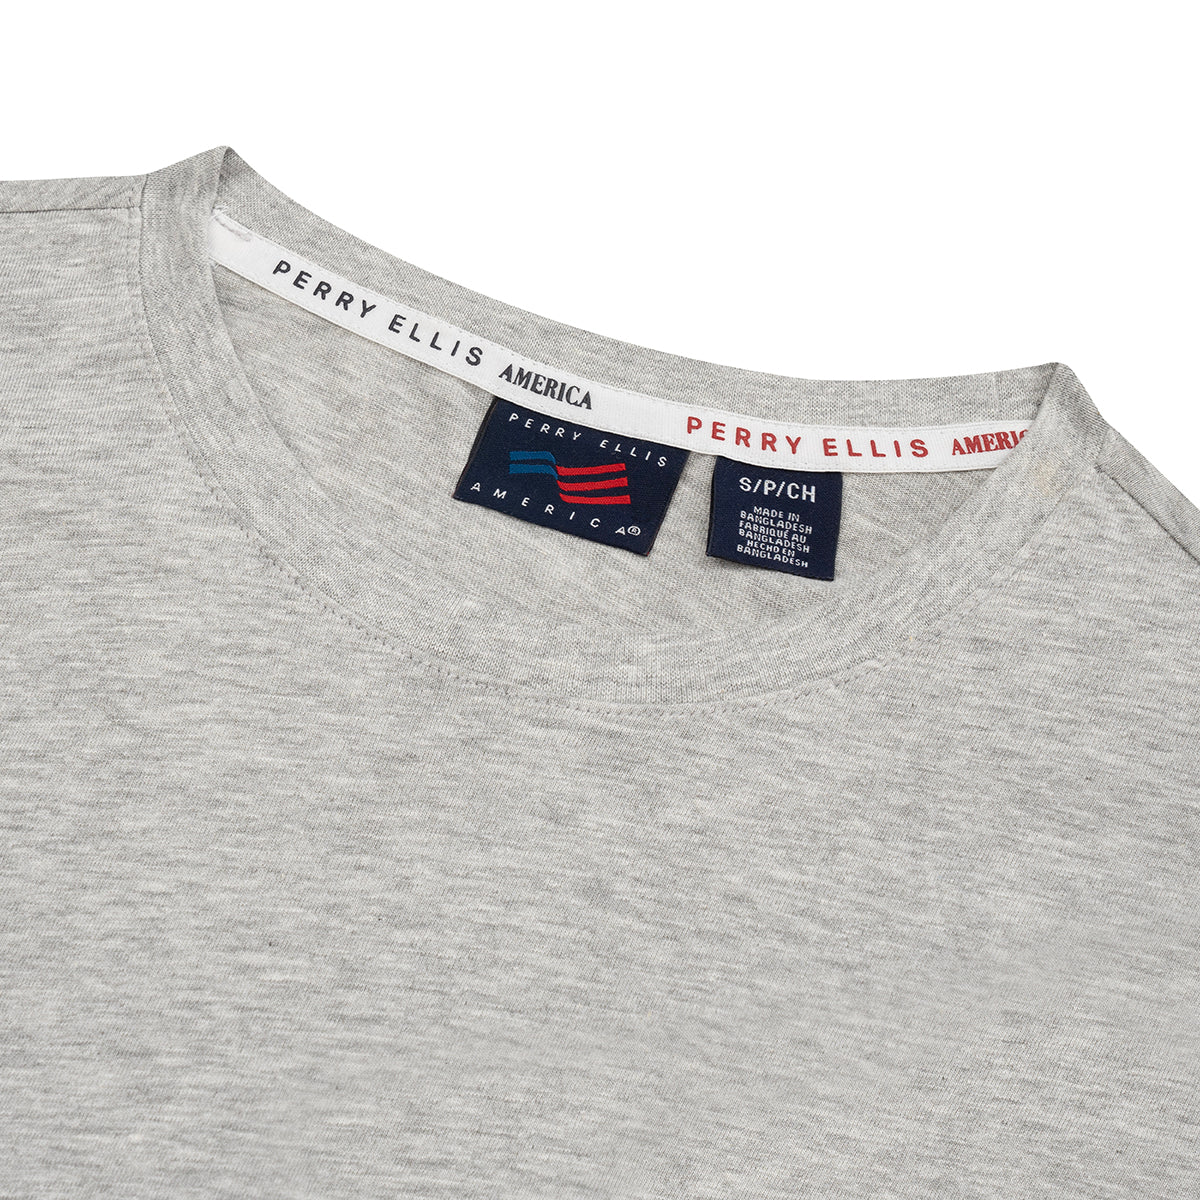 Camiseta manga larga color gris de Perry Ellis TS00021021